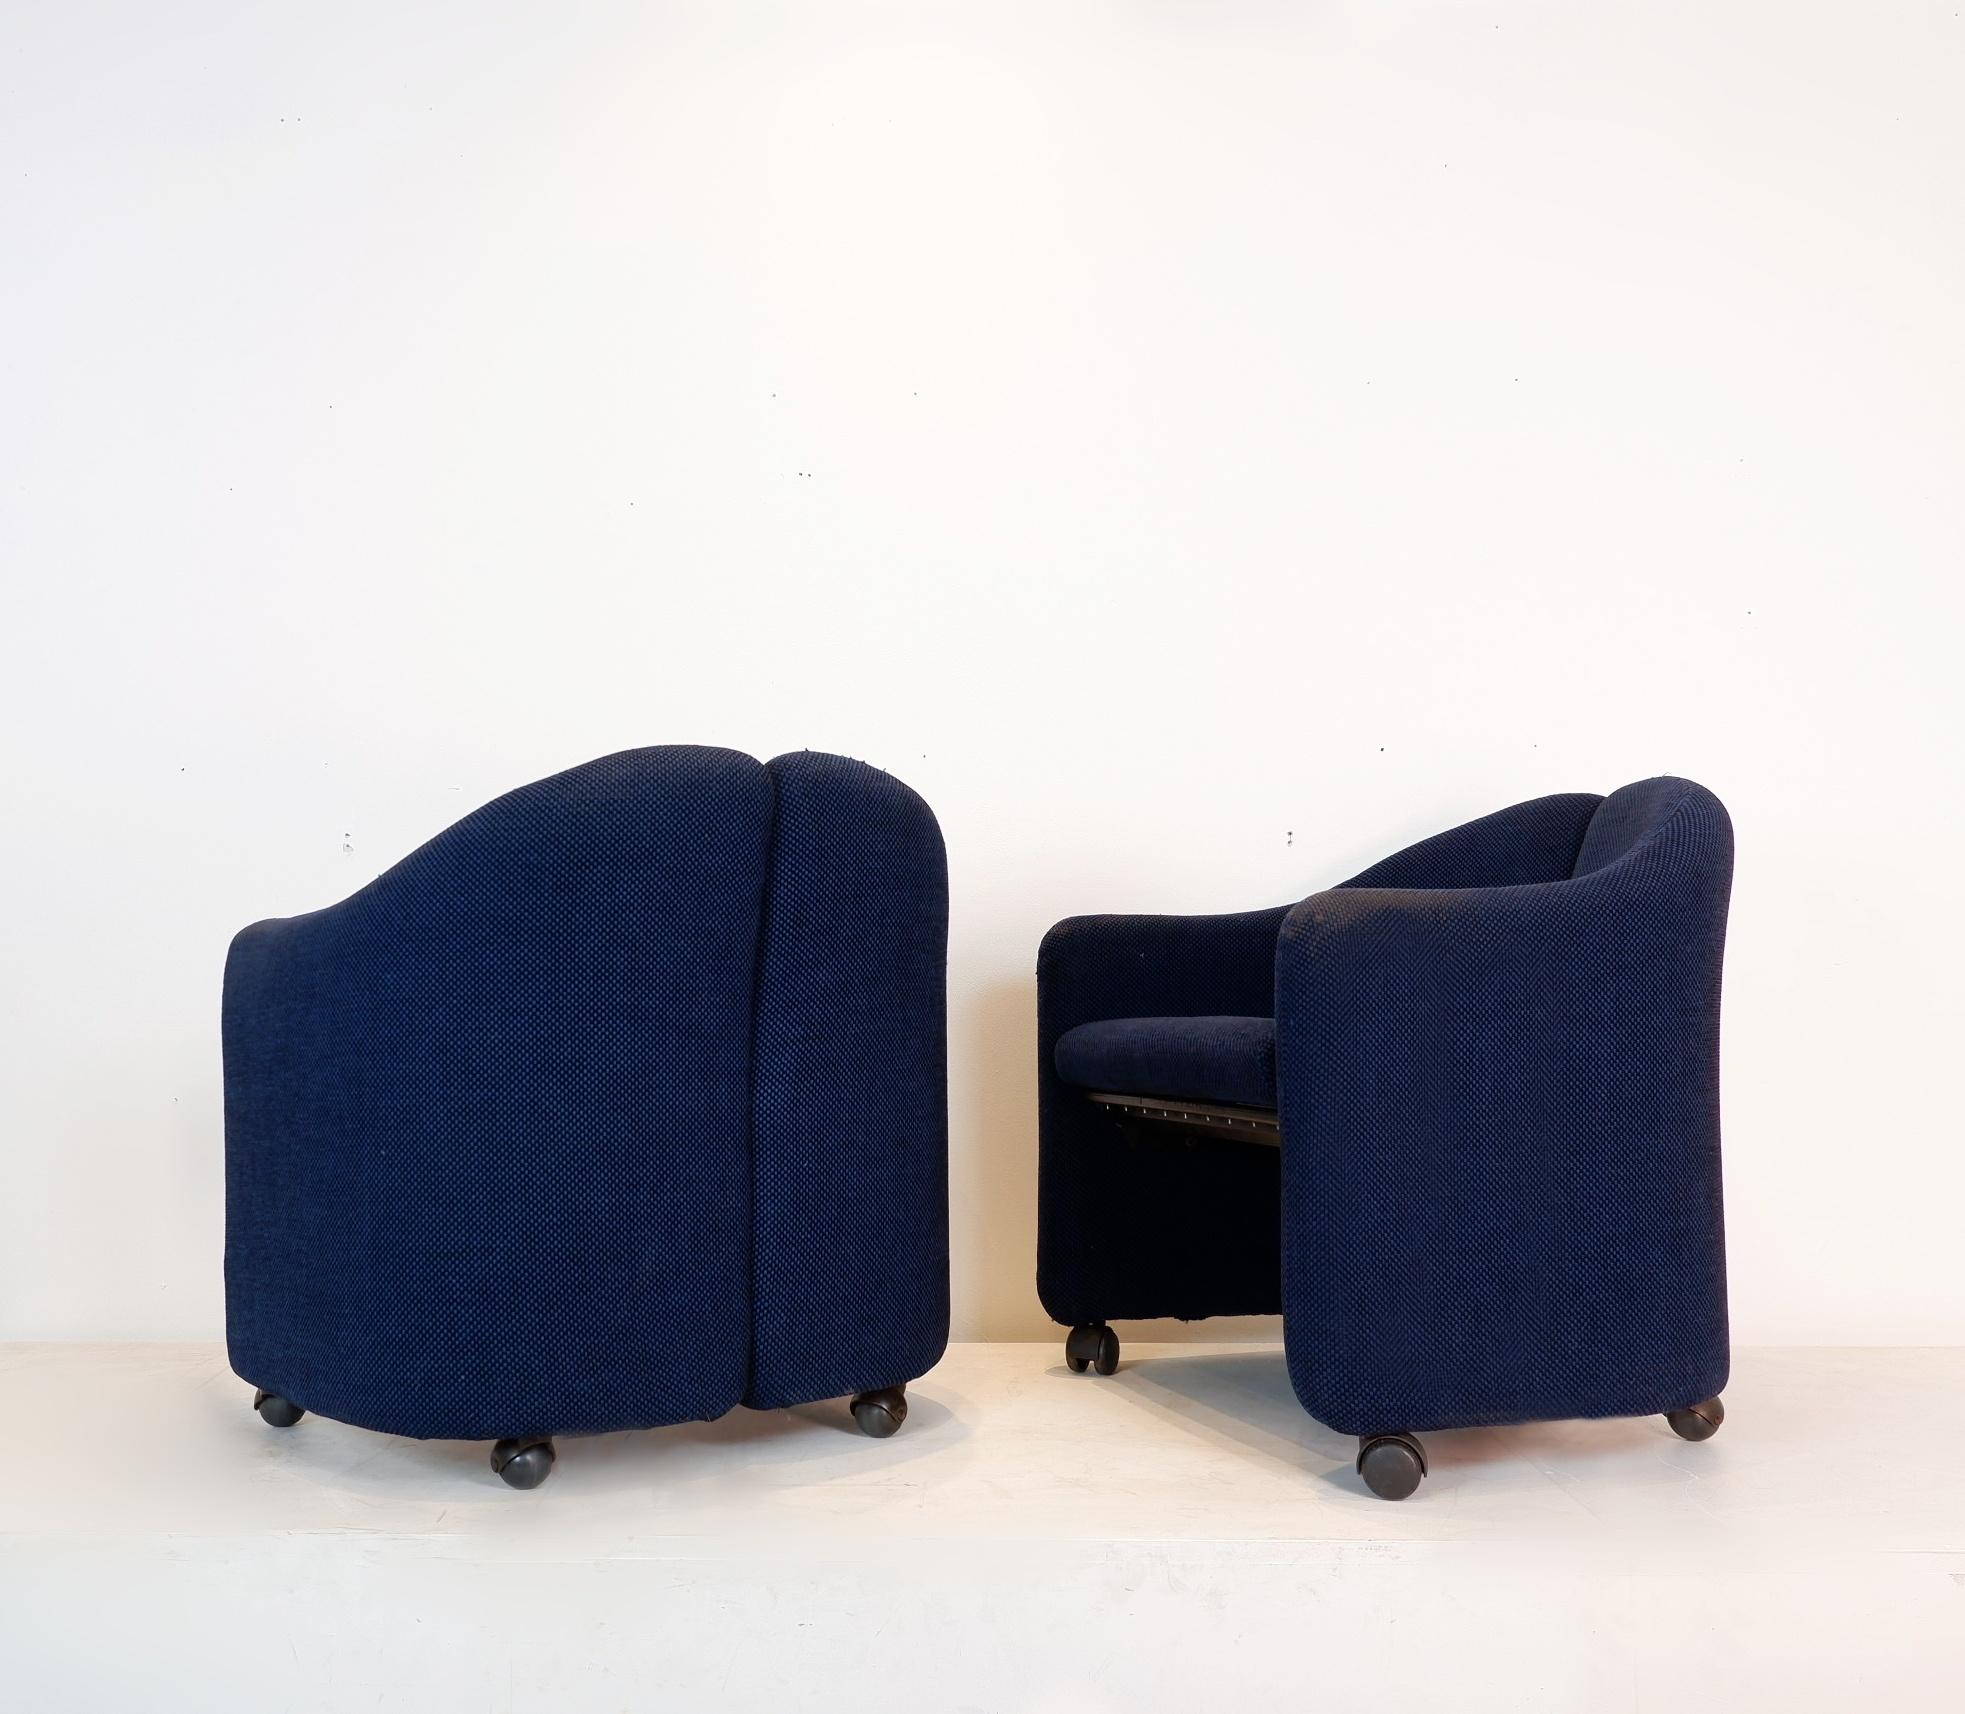 Iconic chair by designer Eugenio Gerli. 